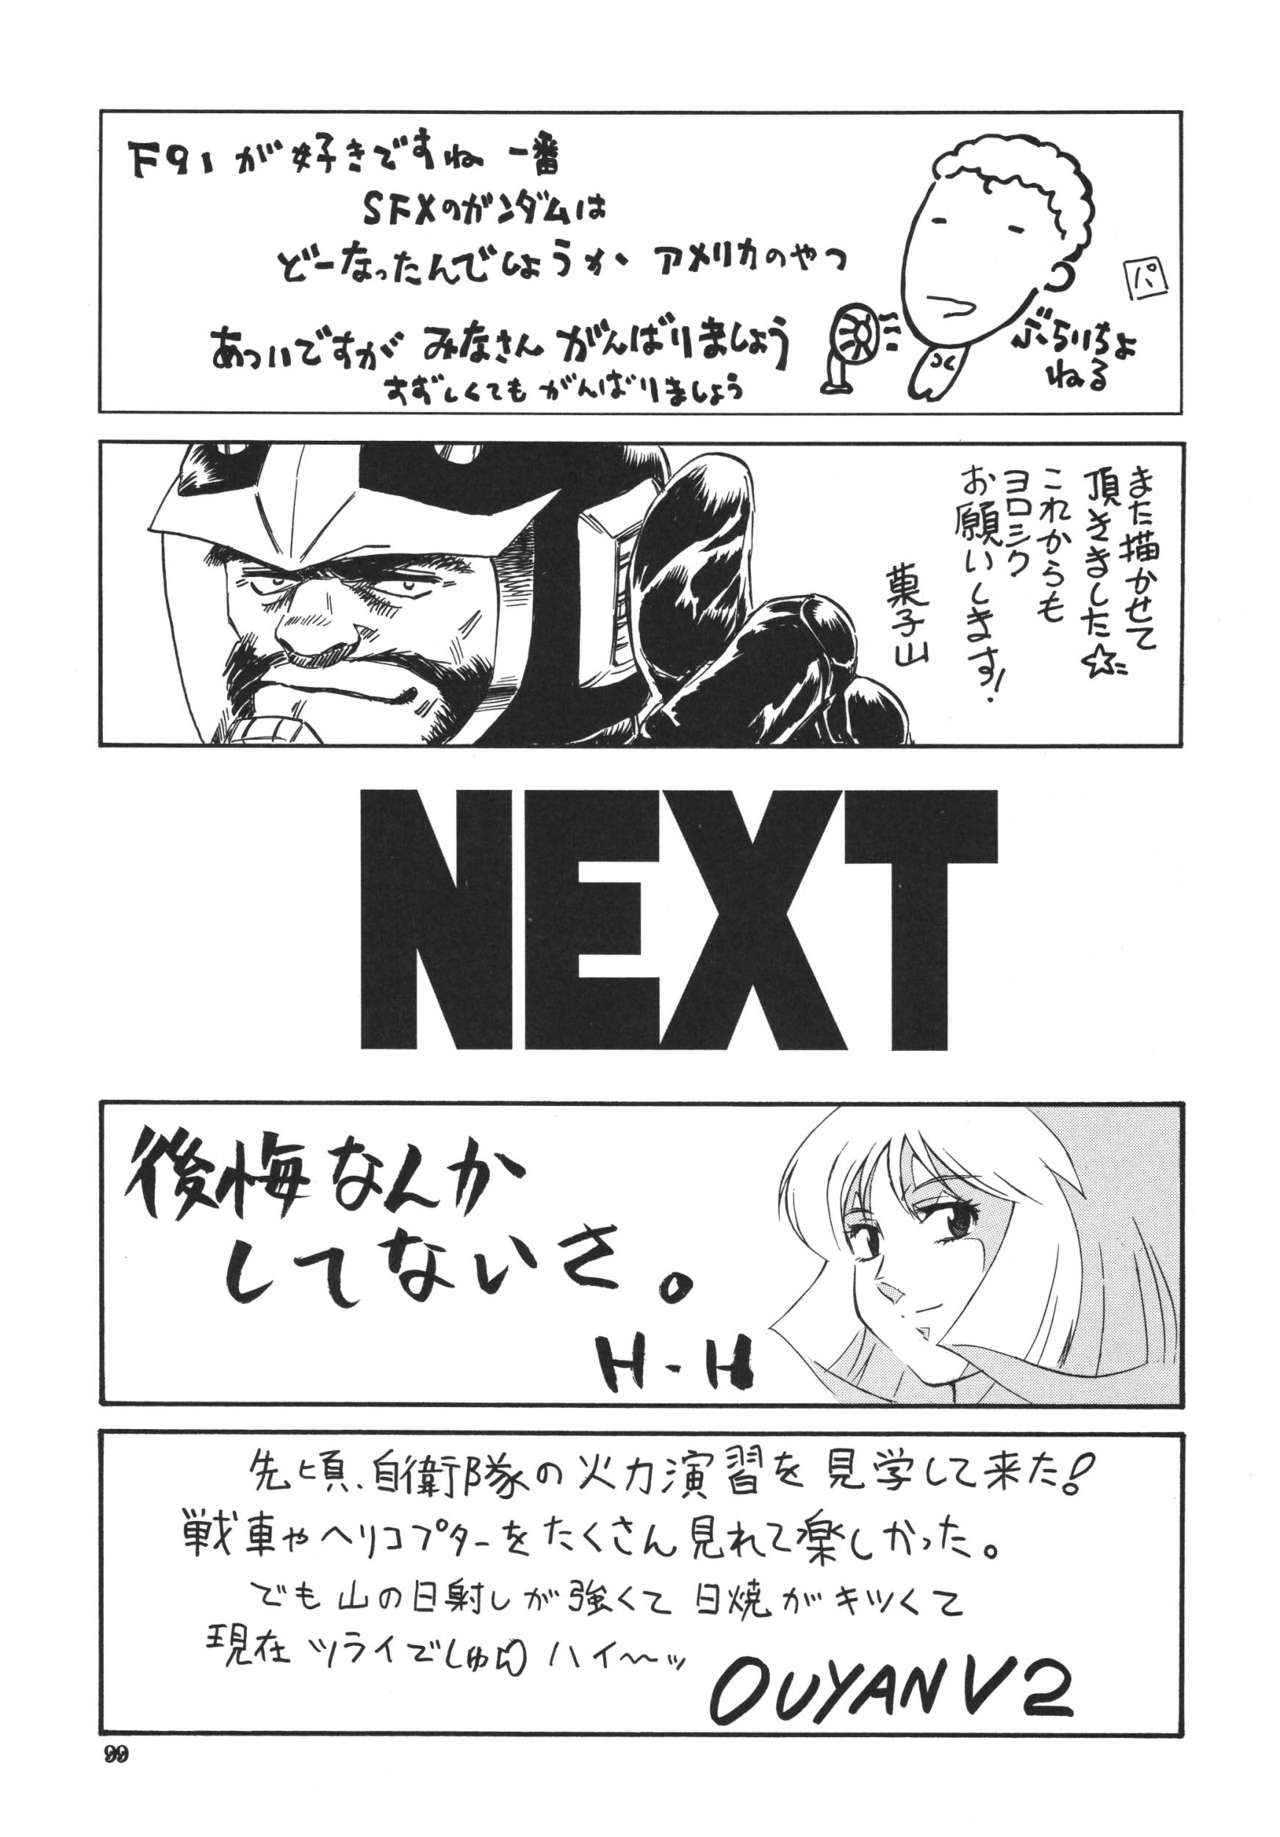 [NEXT (Various)] NEXT Climax Magazine 3 - Gundam Series (Gundam) [Digital] [N・E・X・T (よろず)] NEXT Climax Magazine 3 Gundam Series (ガンダム) [DL版]